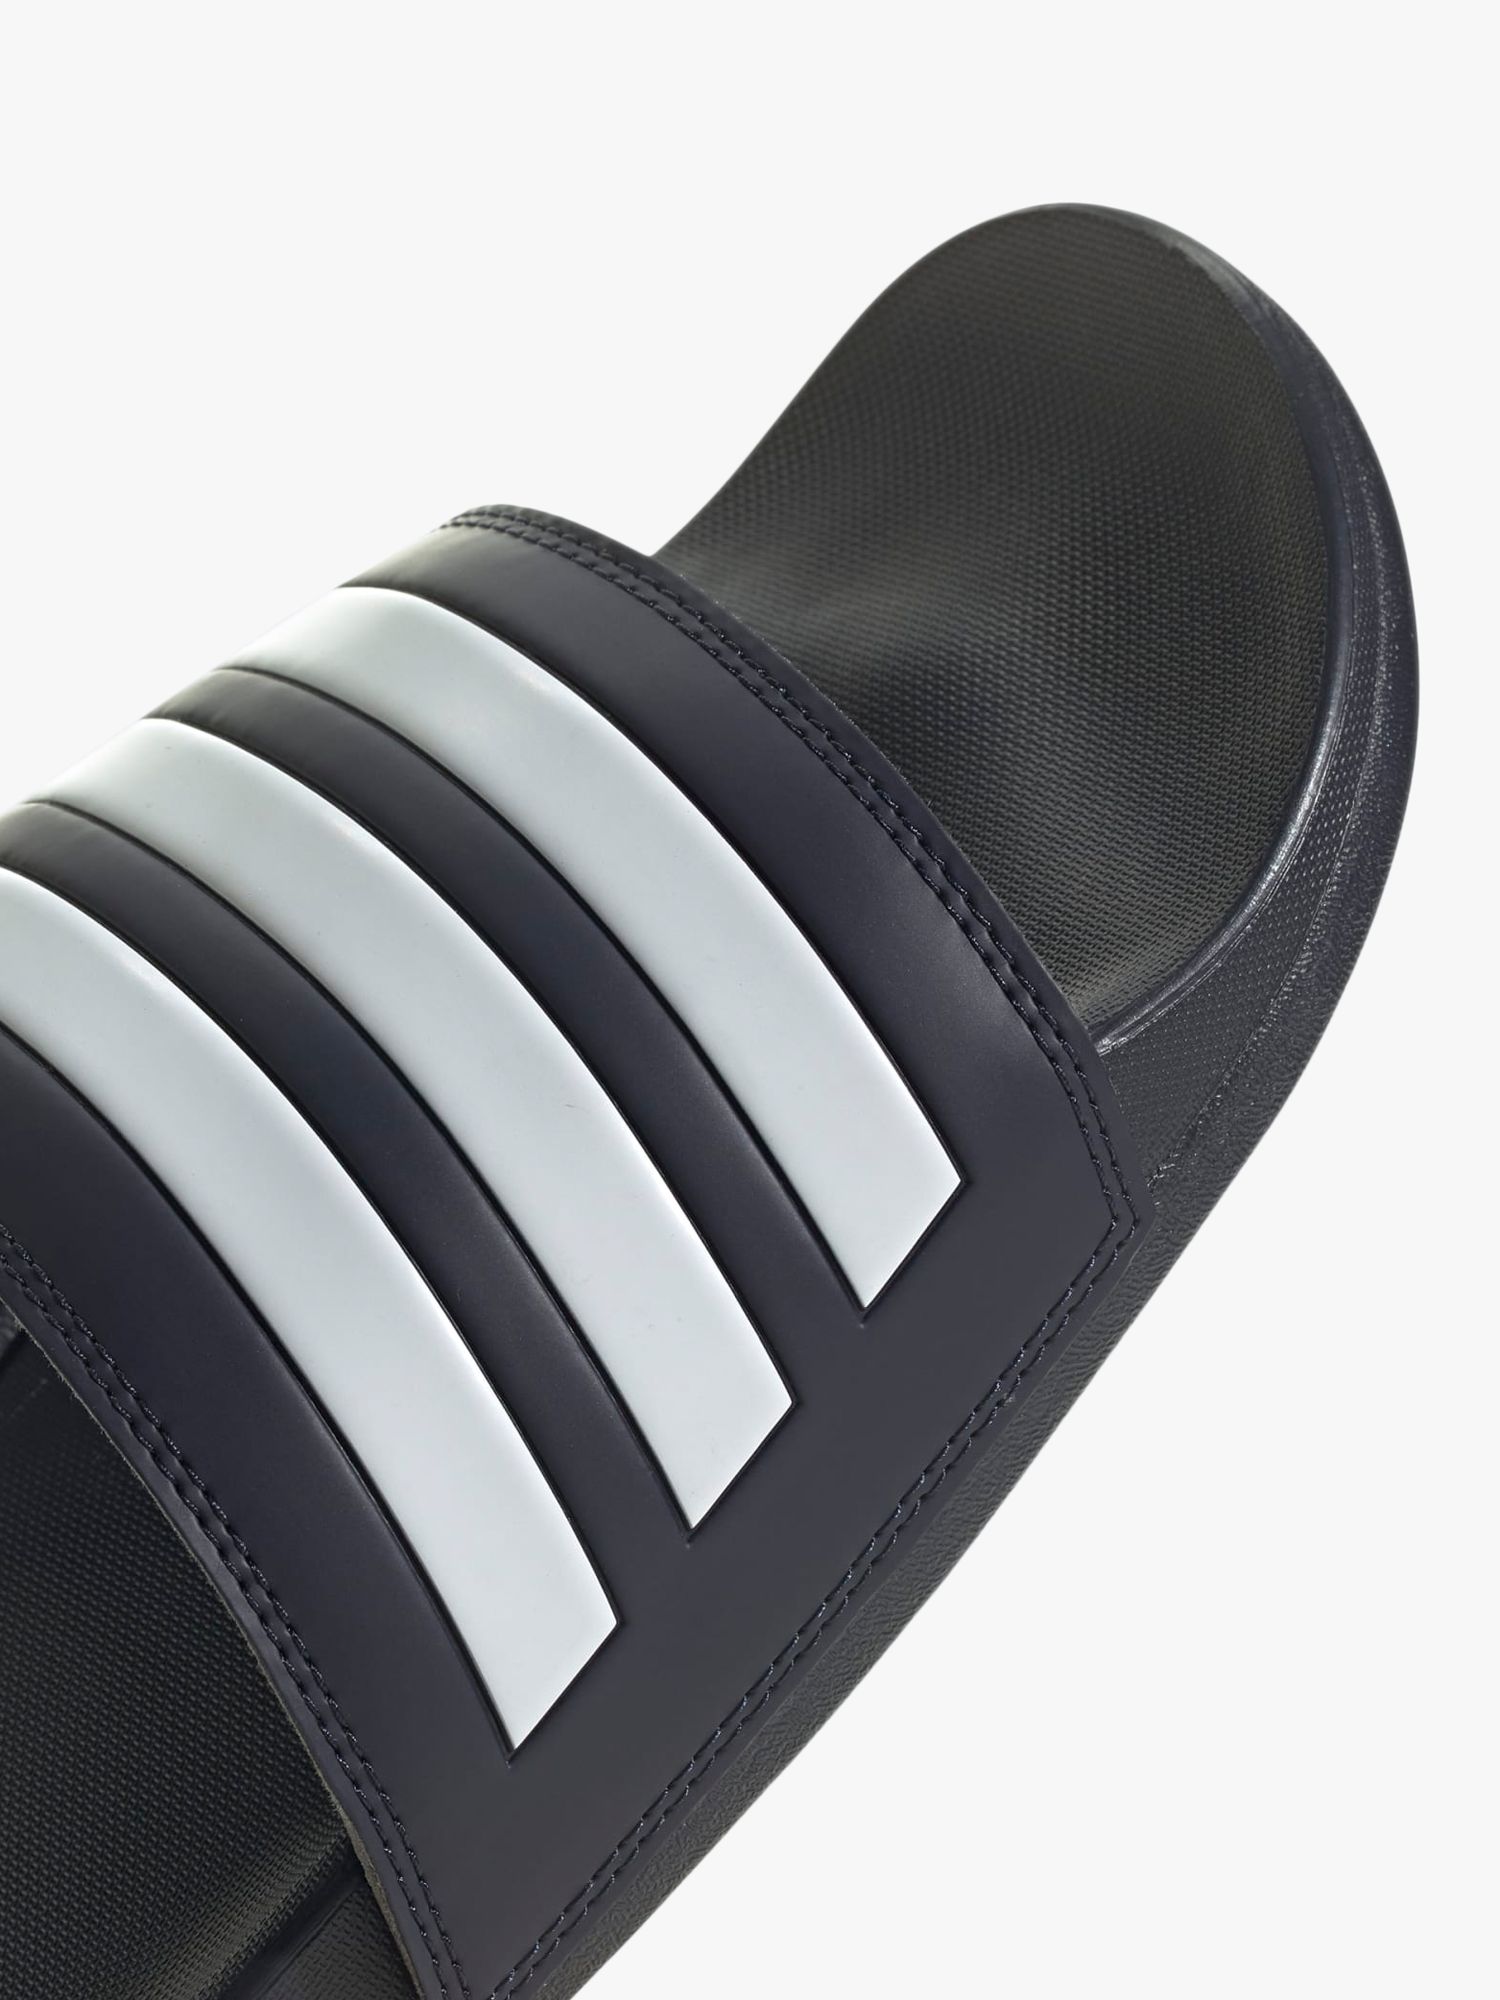 adidas Adilette Aqua Comfort Slides Slippers, Legend Ink/White, 7